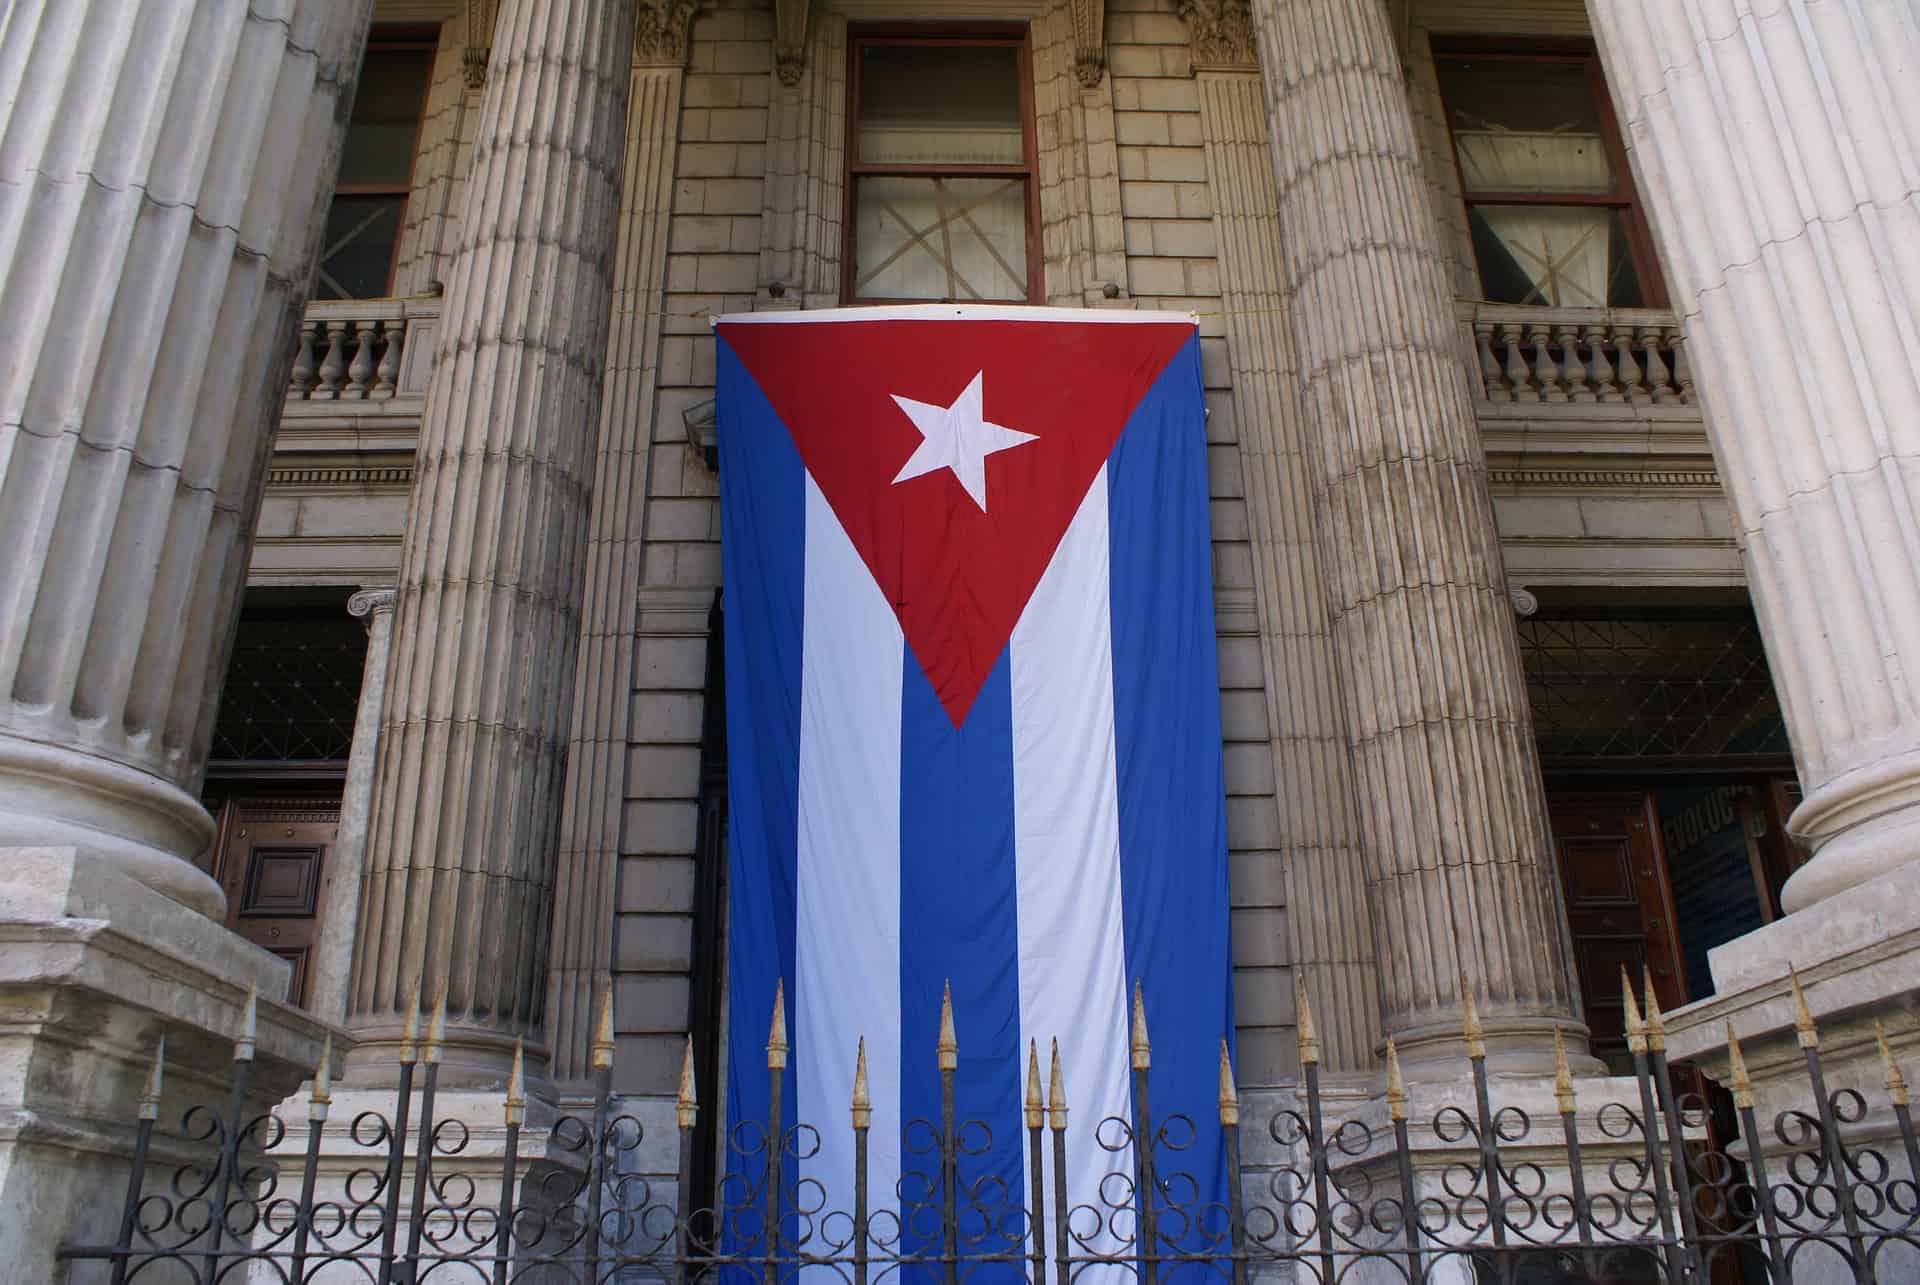 The Cuban flag hangs in Havana.